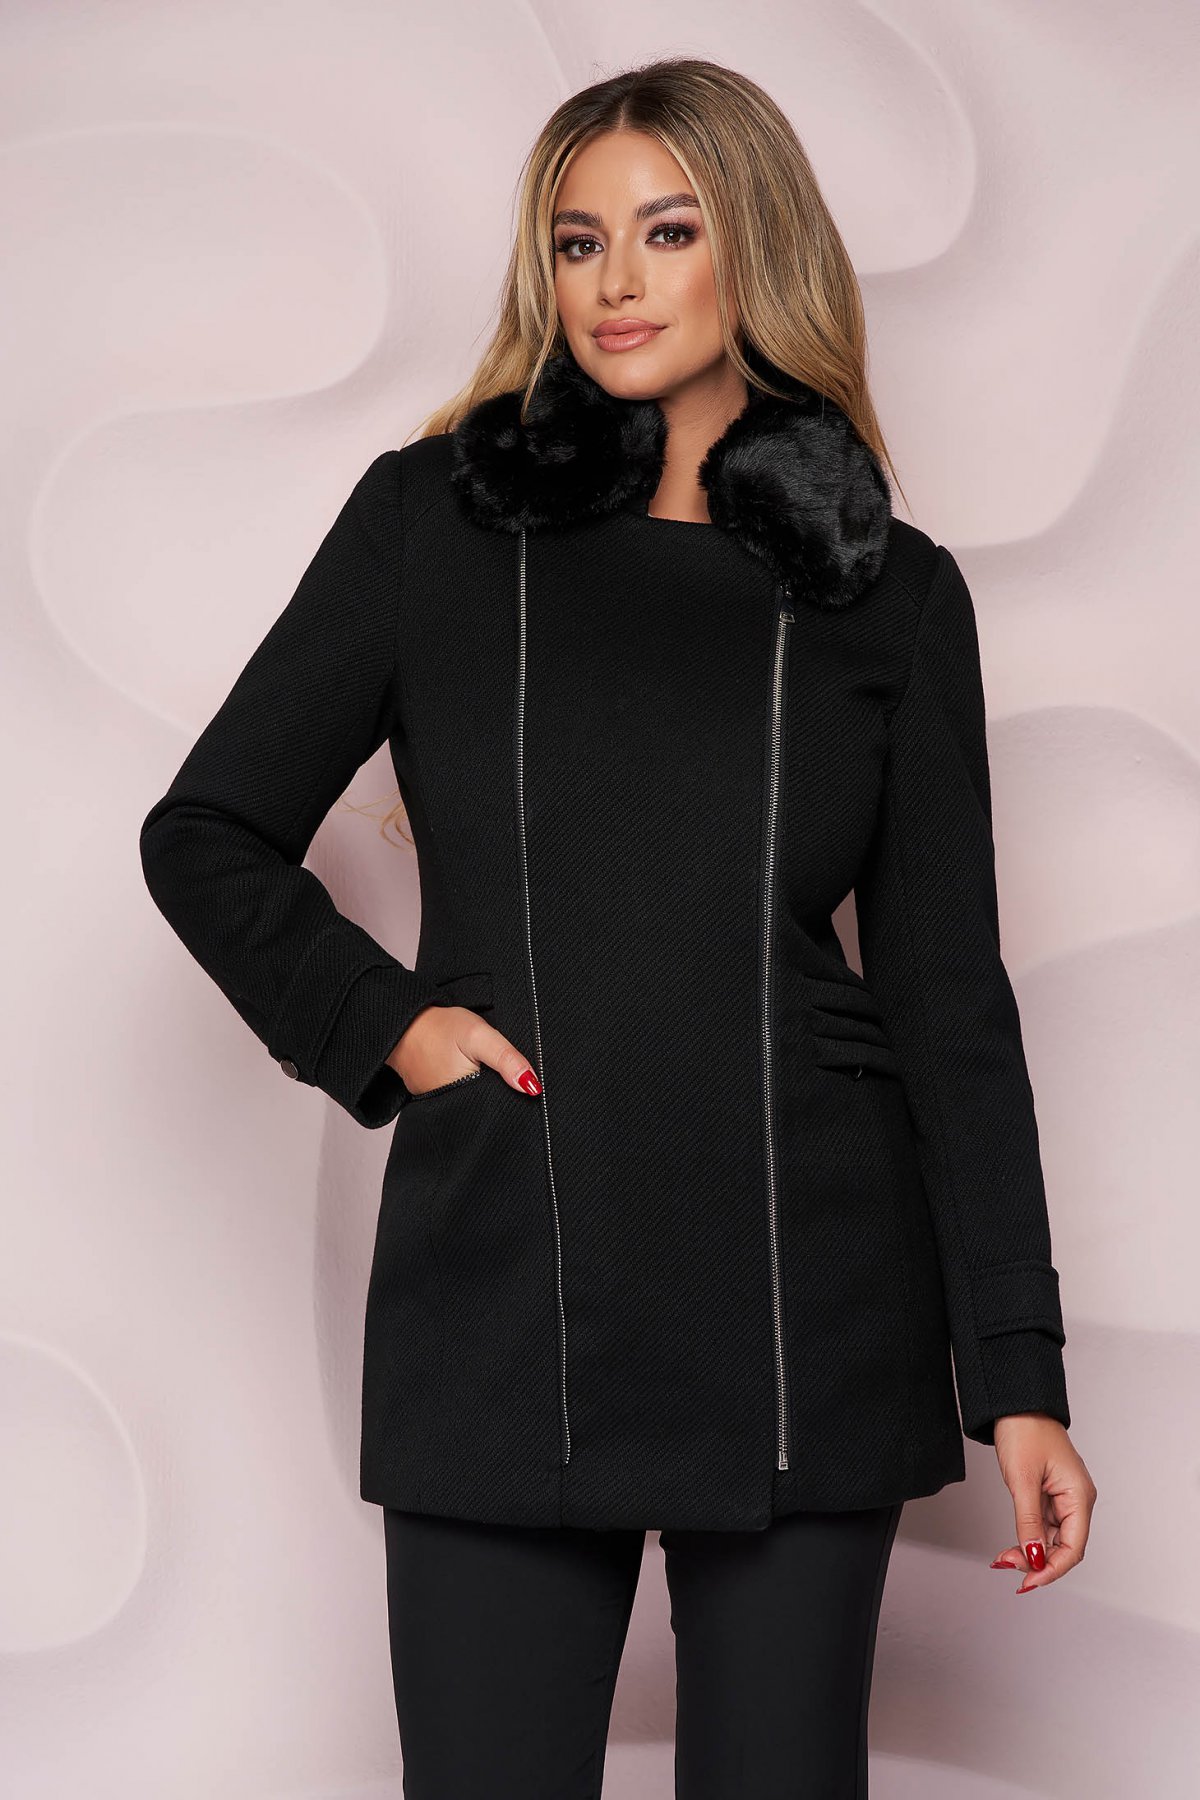 Palton SunShine negru elegant scurt cu un croi drept din stofa accesorizat cu blana ecologica la guler